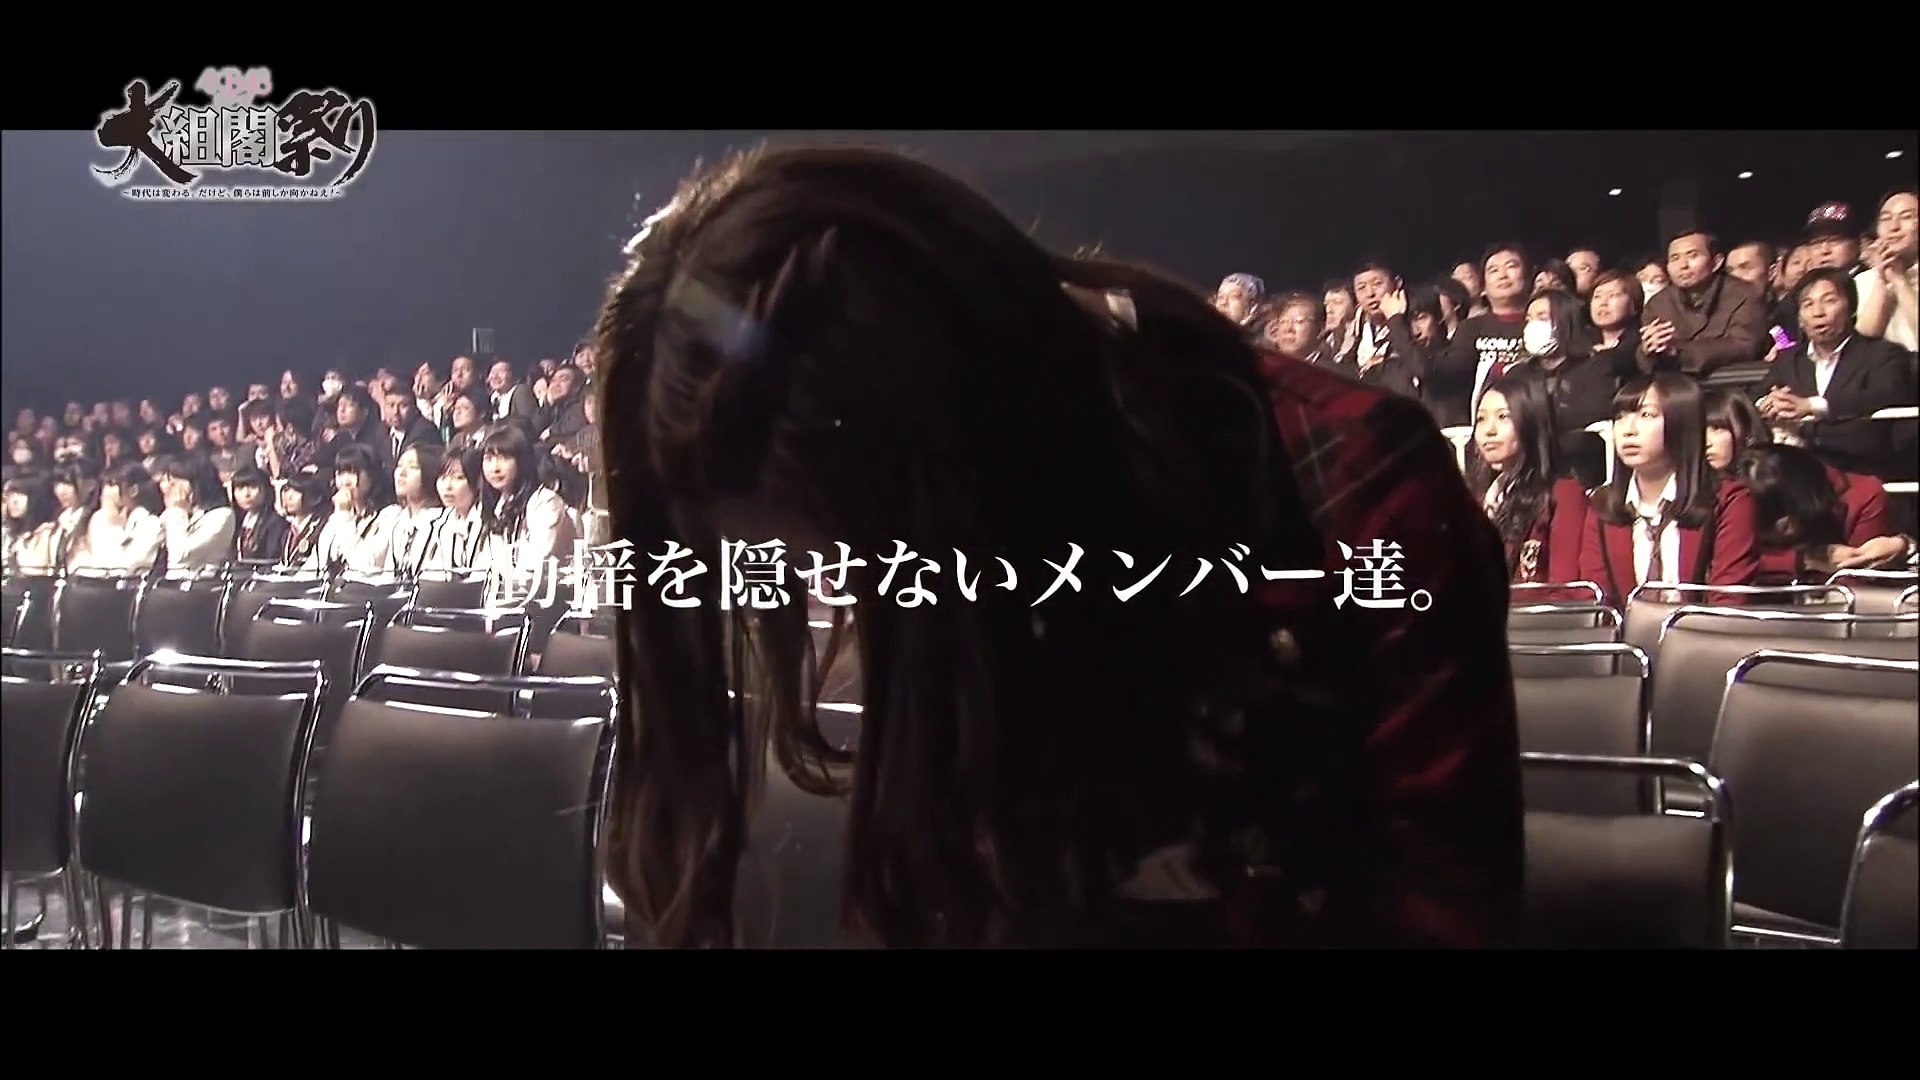 Akb48グループ 大組閣祭り Dvd Blu Ray ダイジェスト映像公開 Akb48 公式 Video Dailymotion